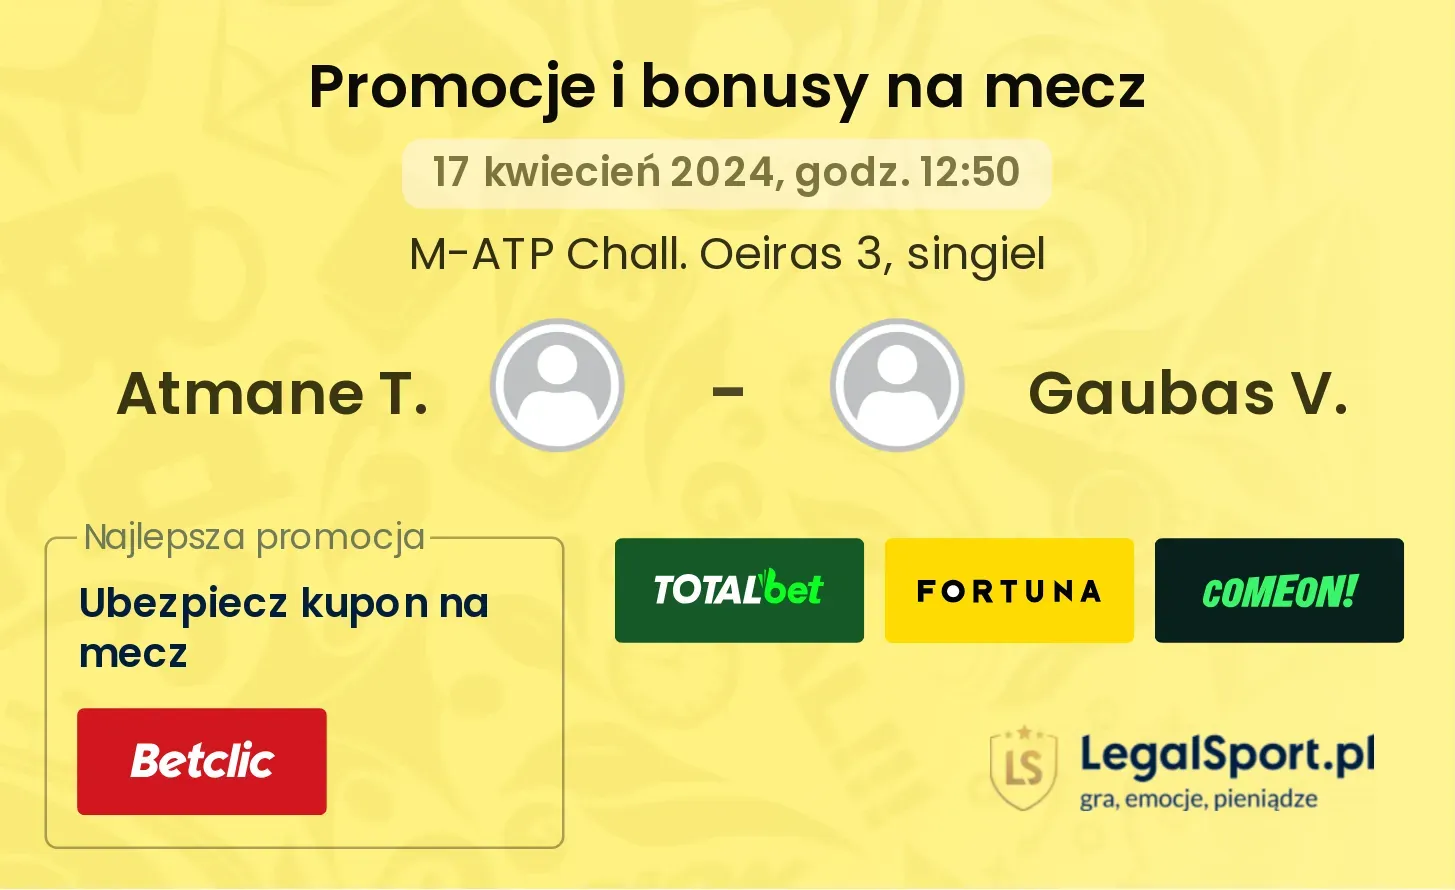 Atmane T. - Gaubas V. promocje bonusy na mecz